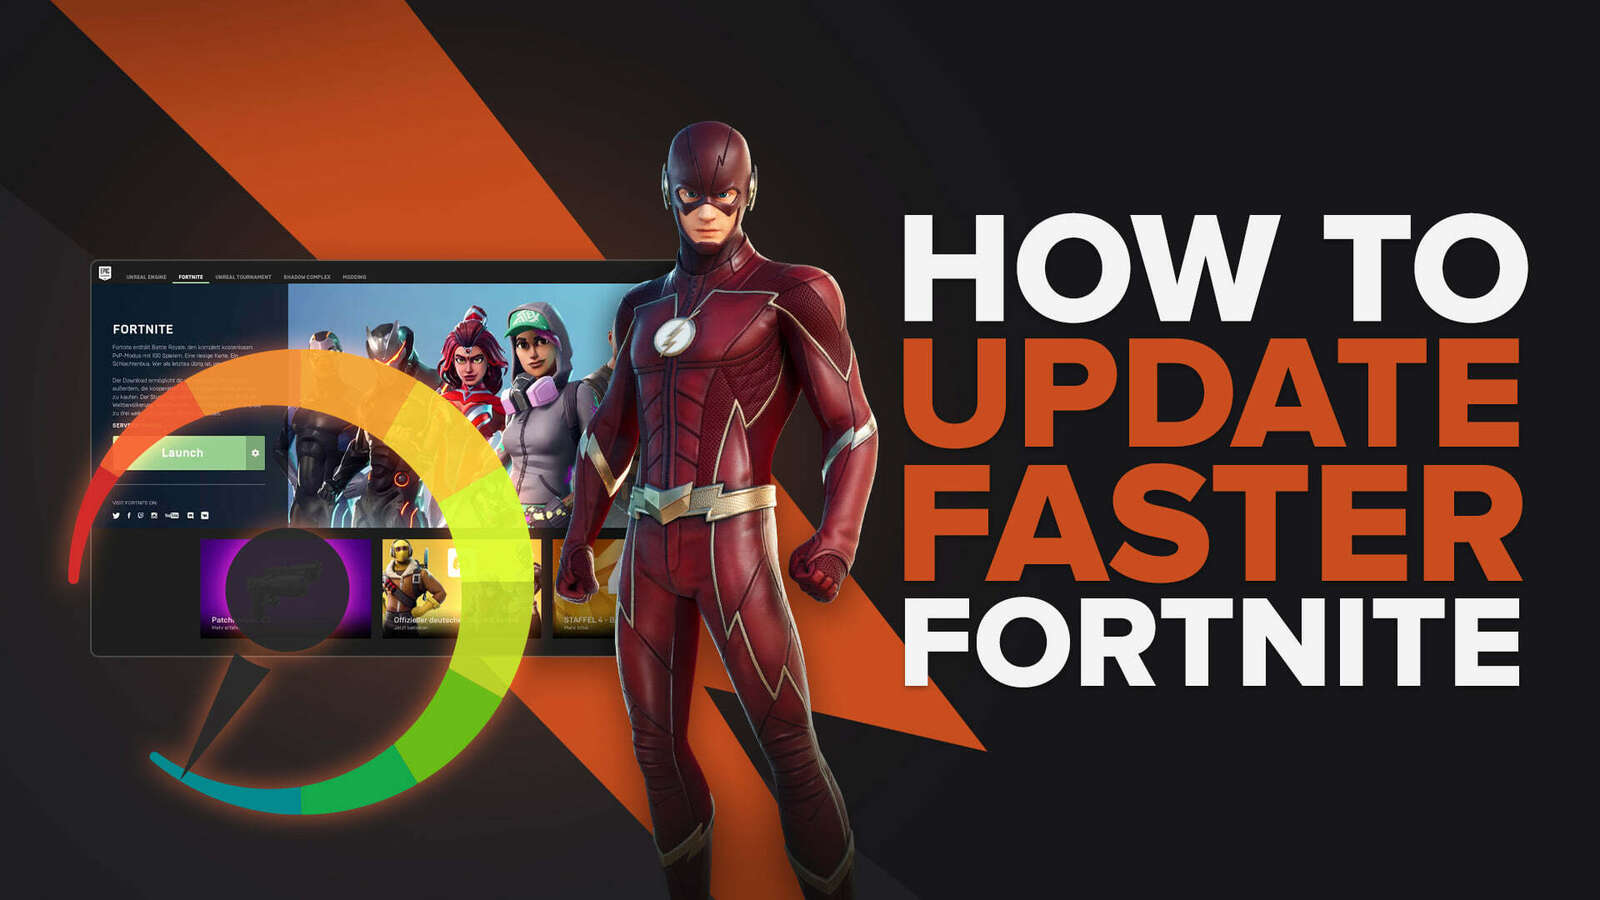 How To Make Fortnite Update Faster